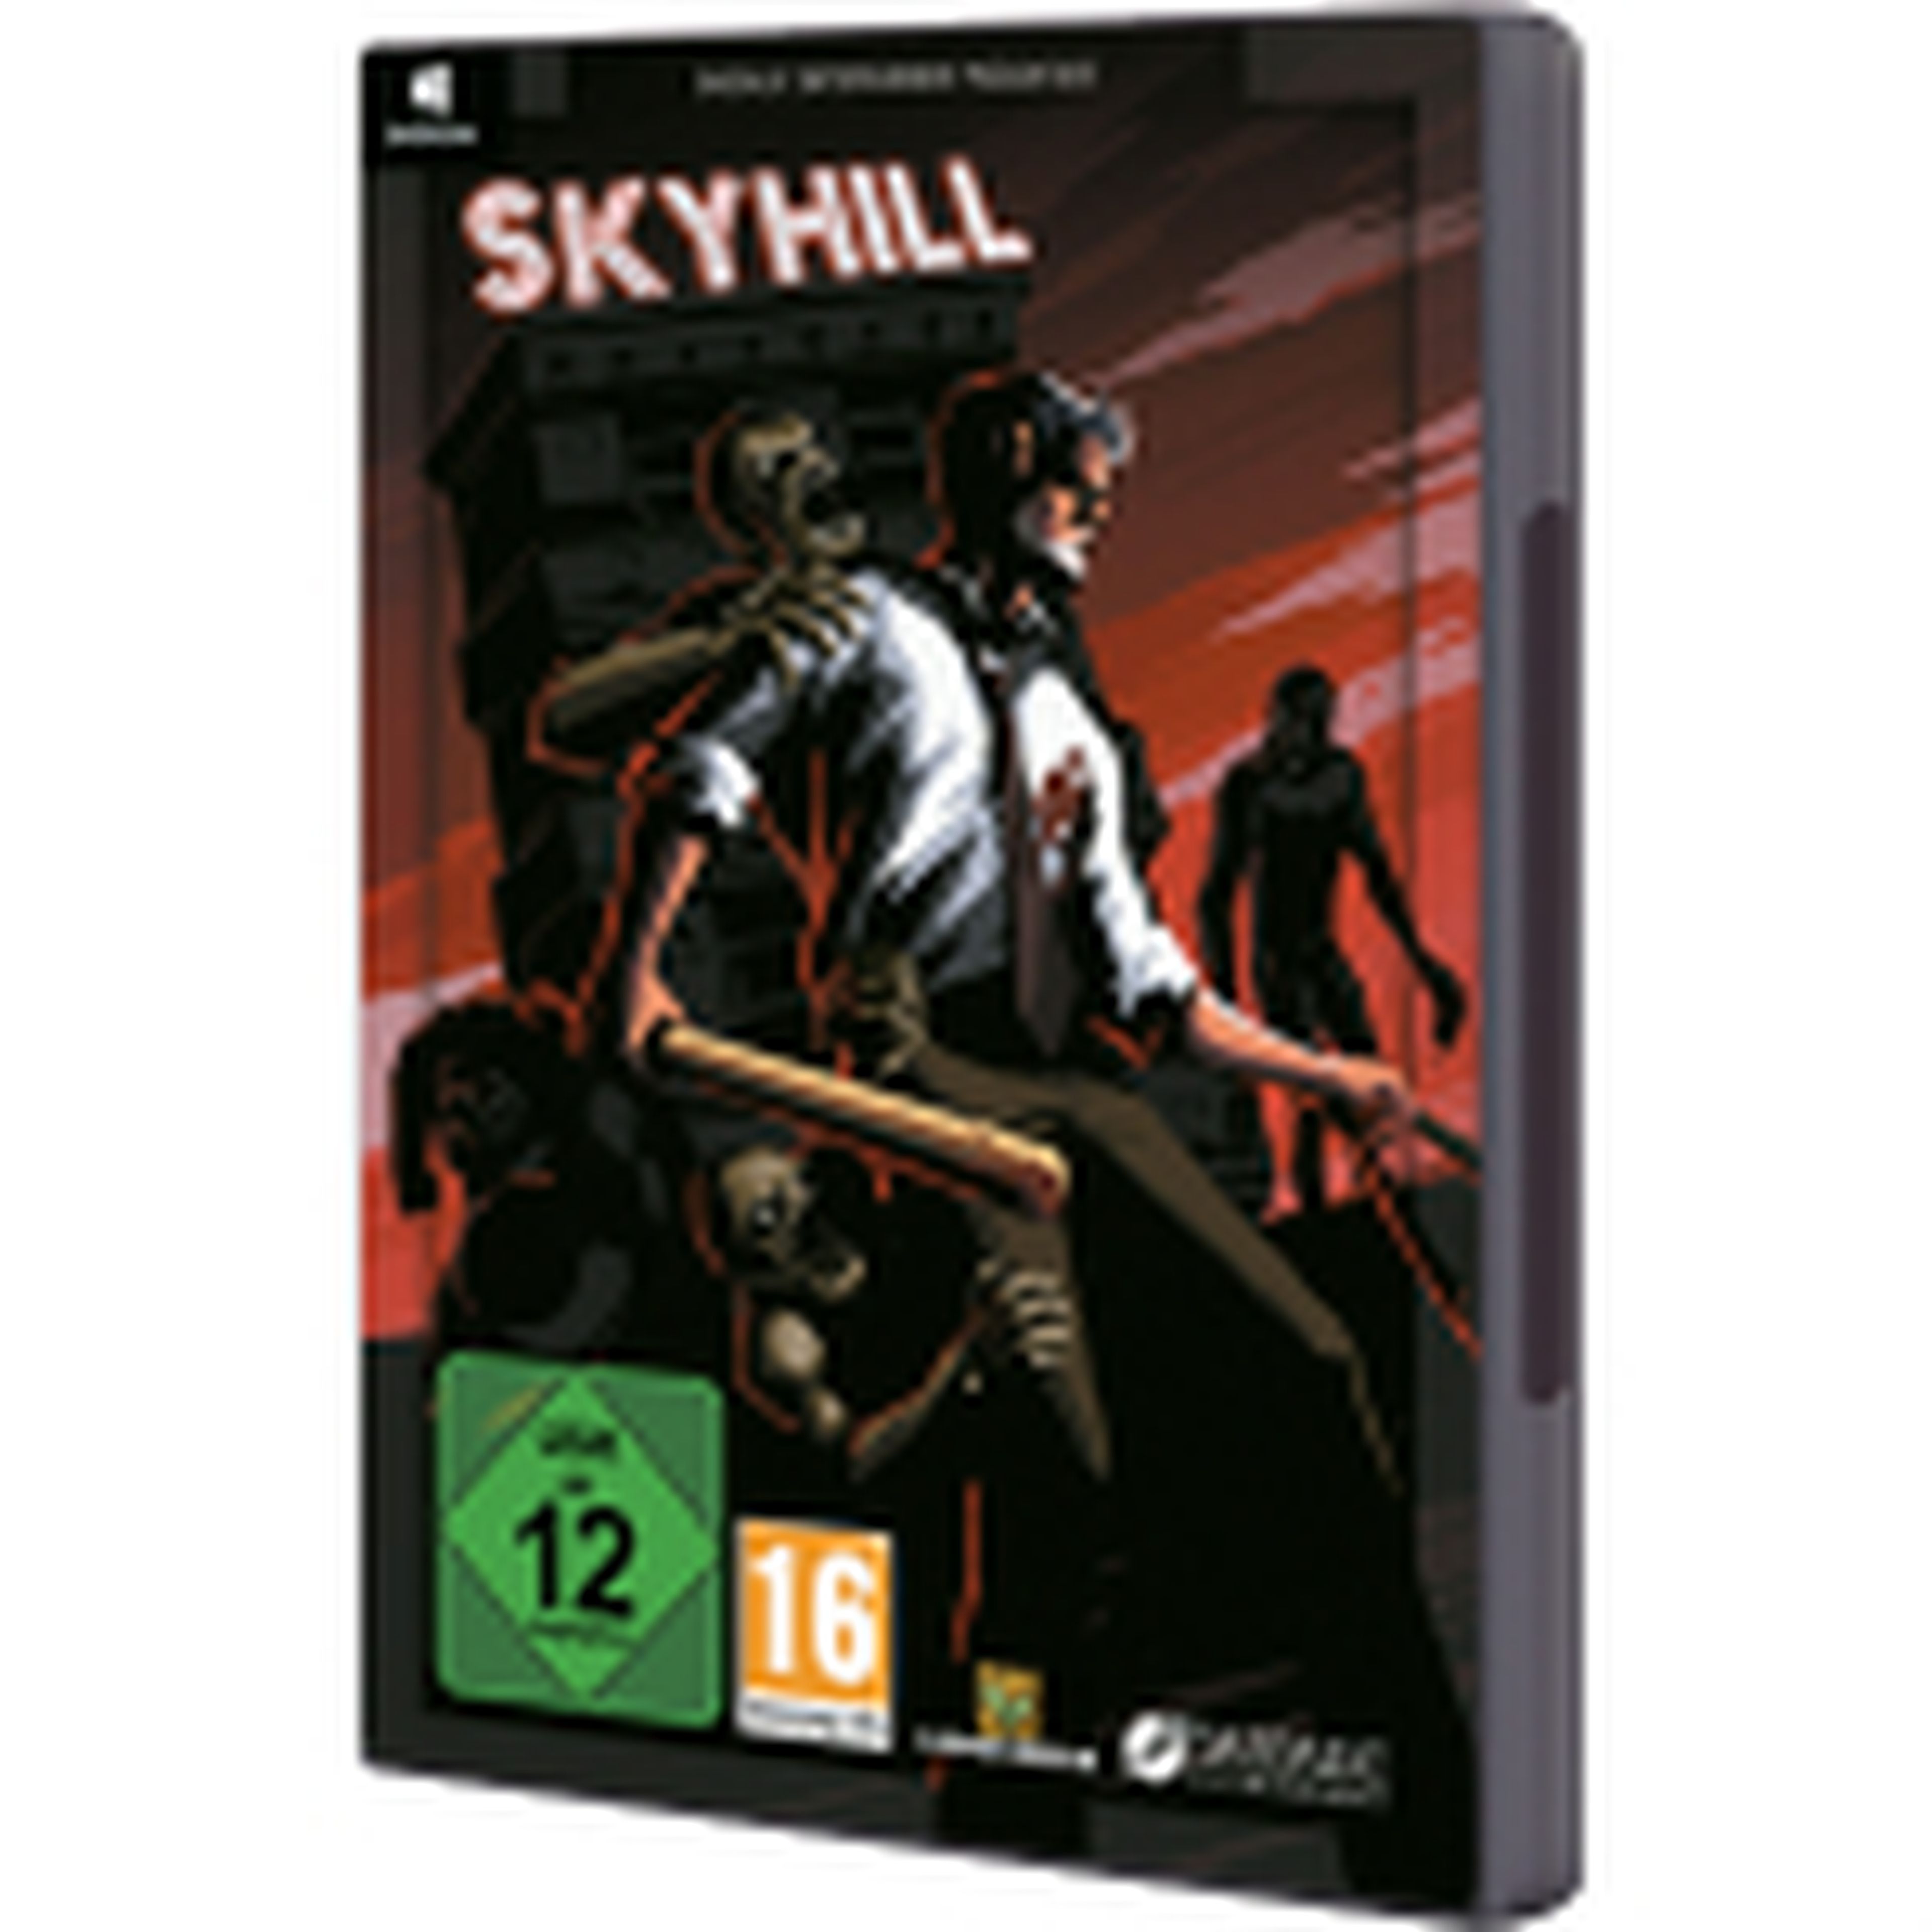 Skyhill para PC